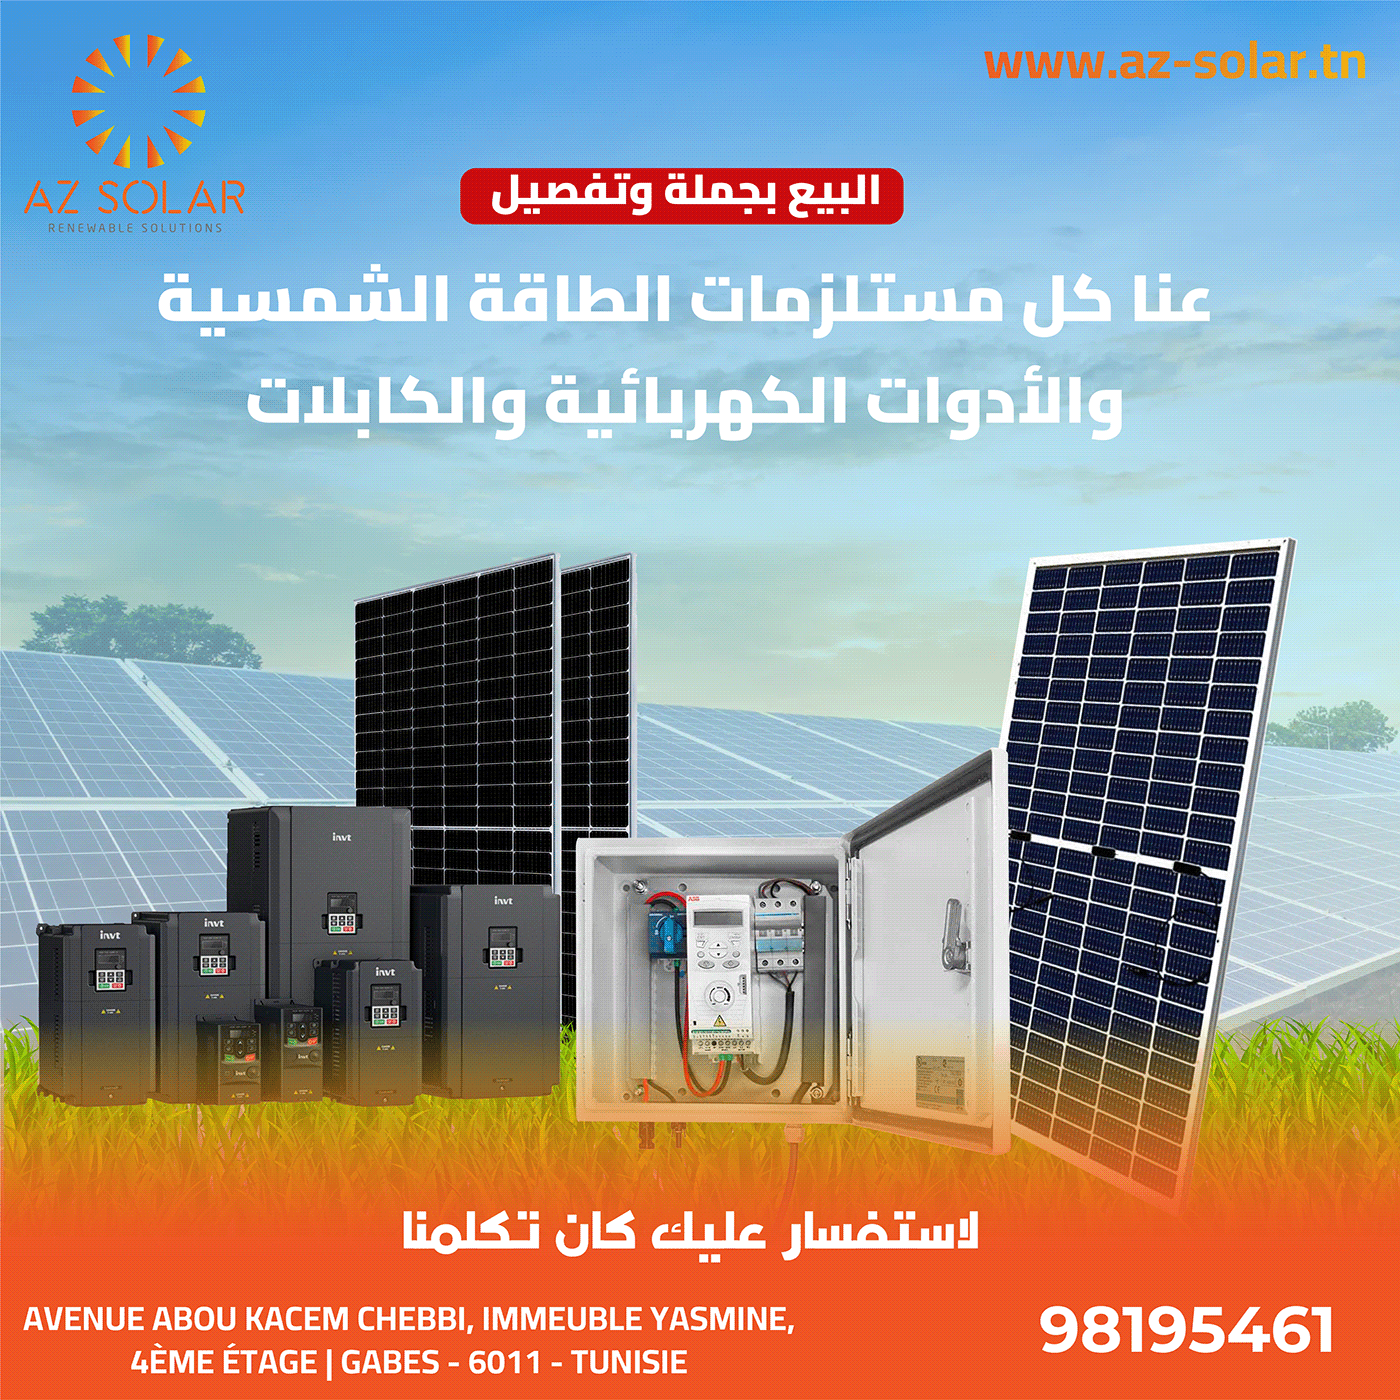 photovoltaic solar energy electricity power